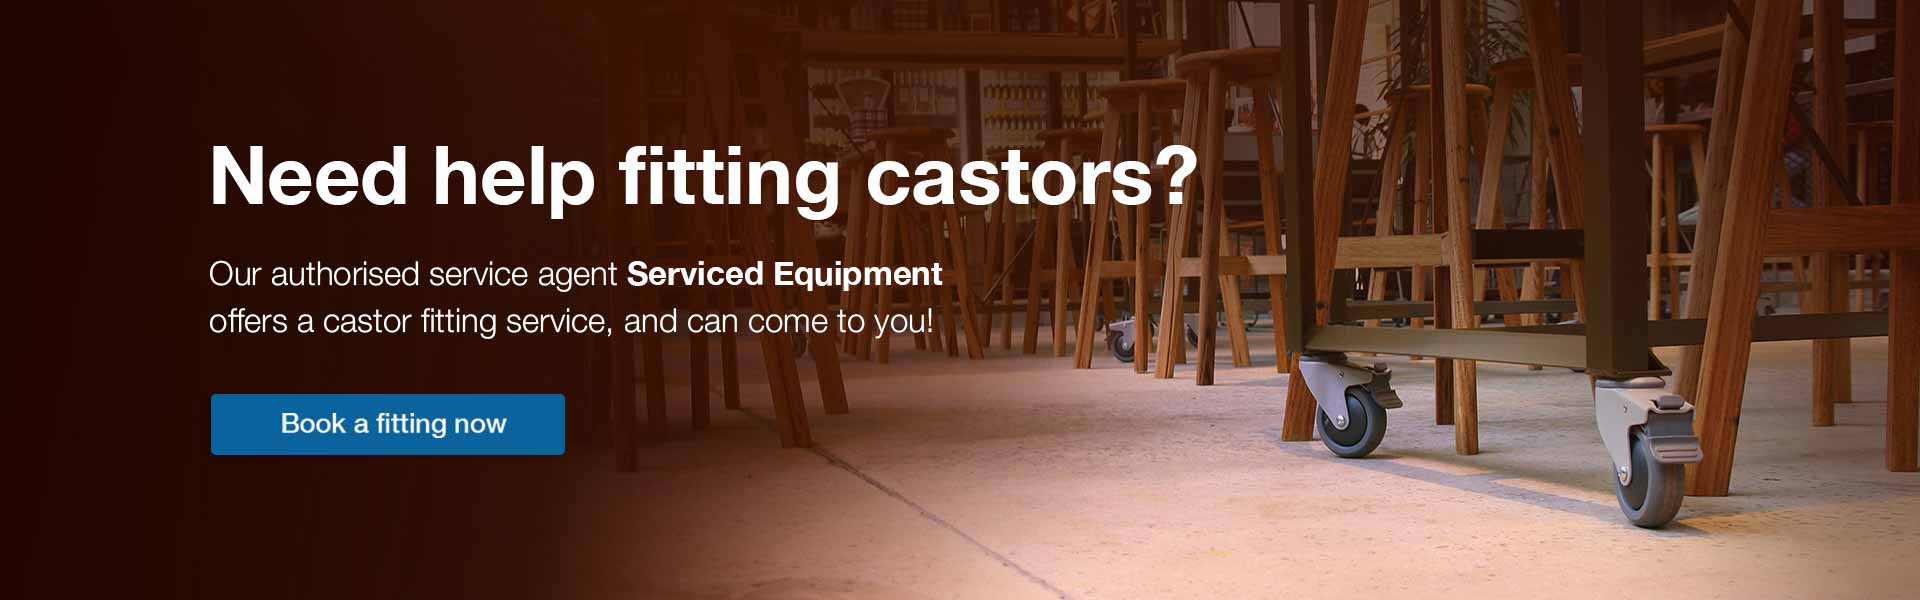 Castor fitting service